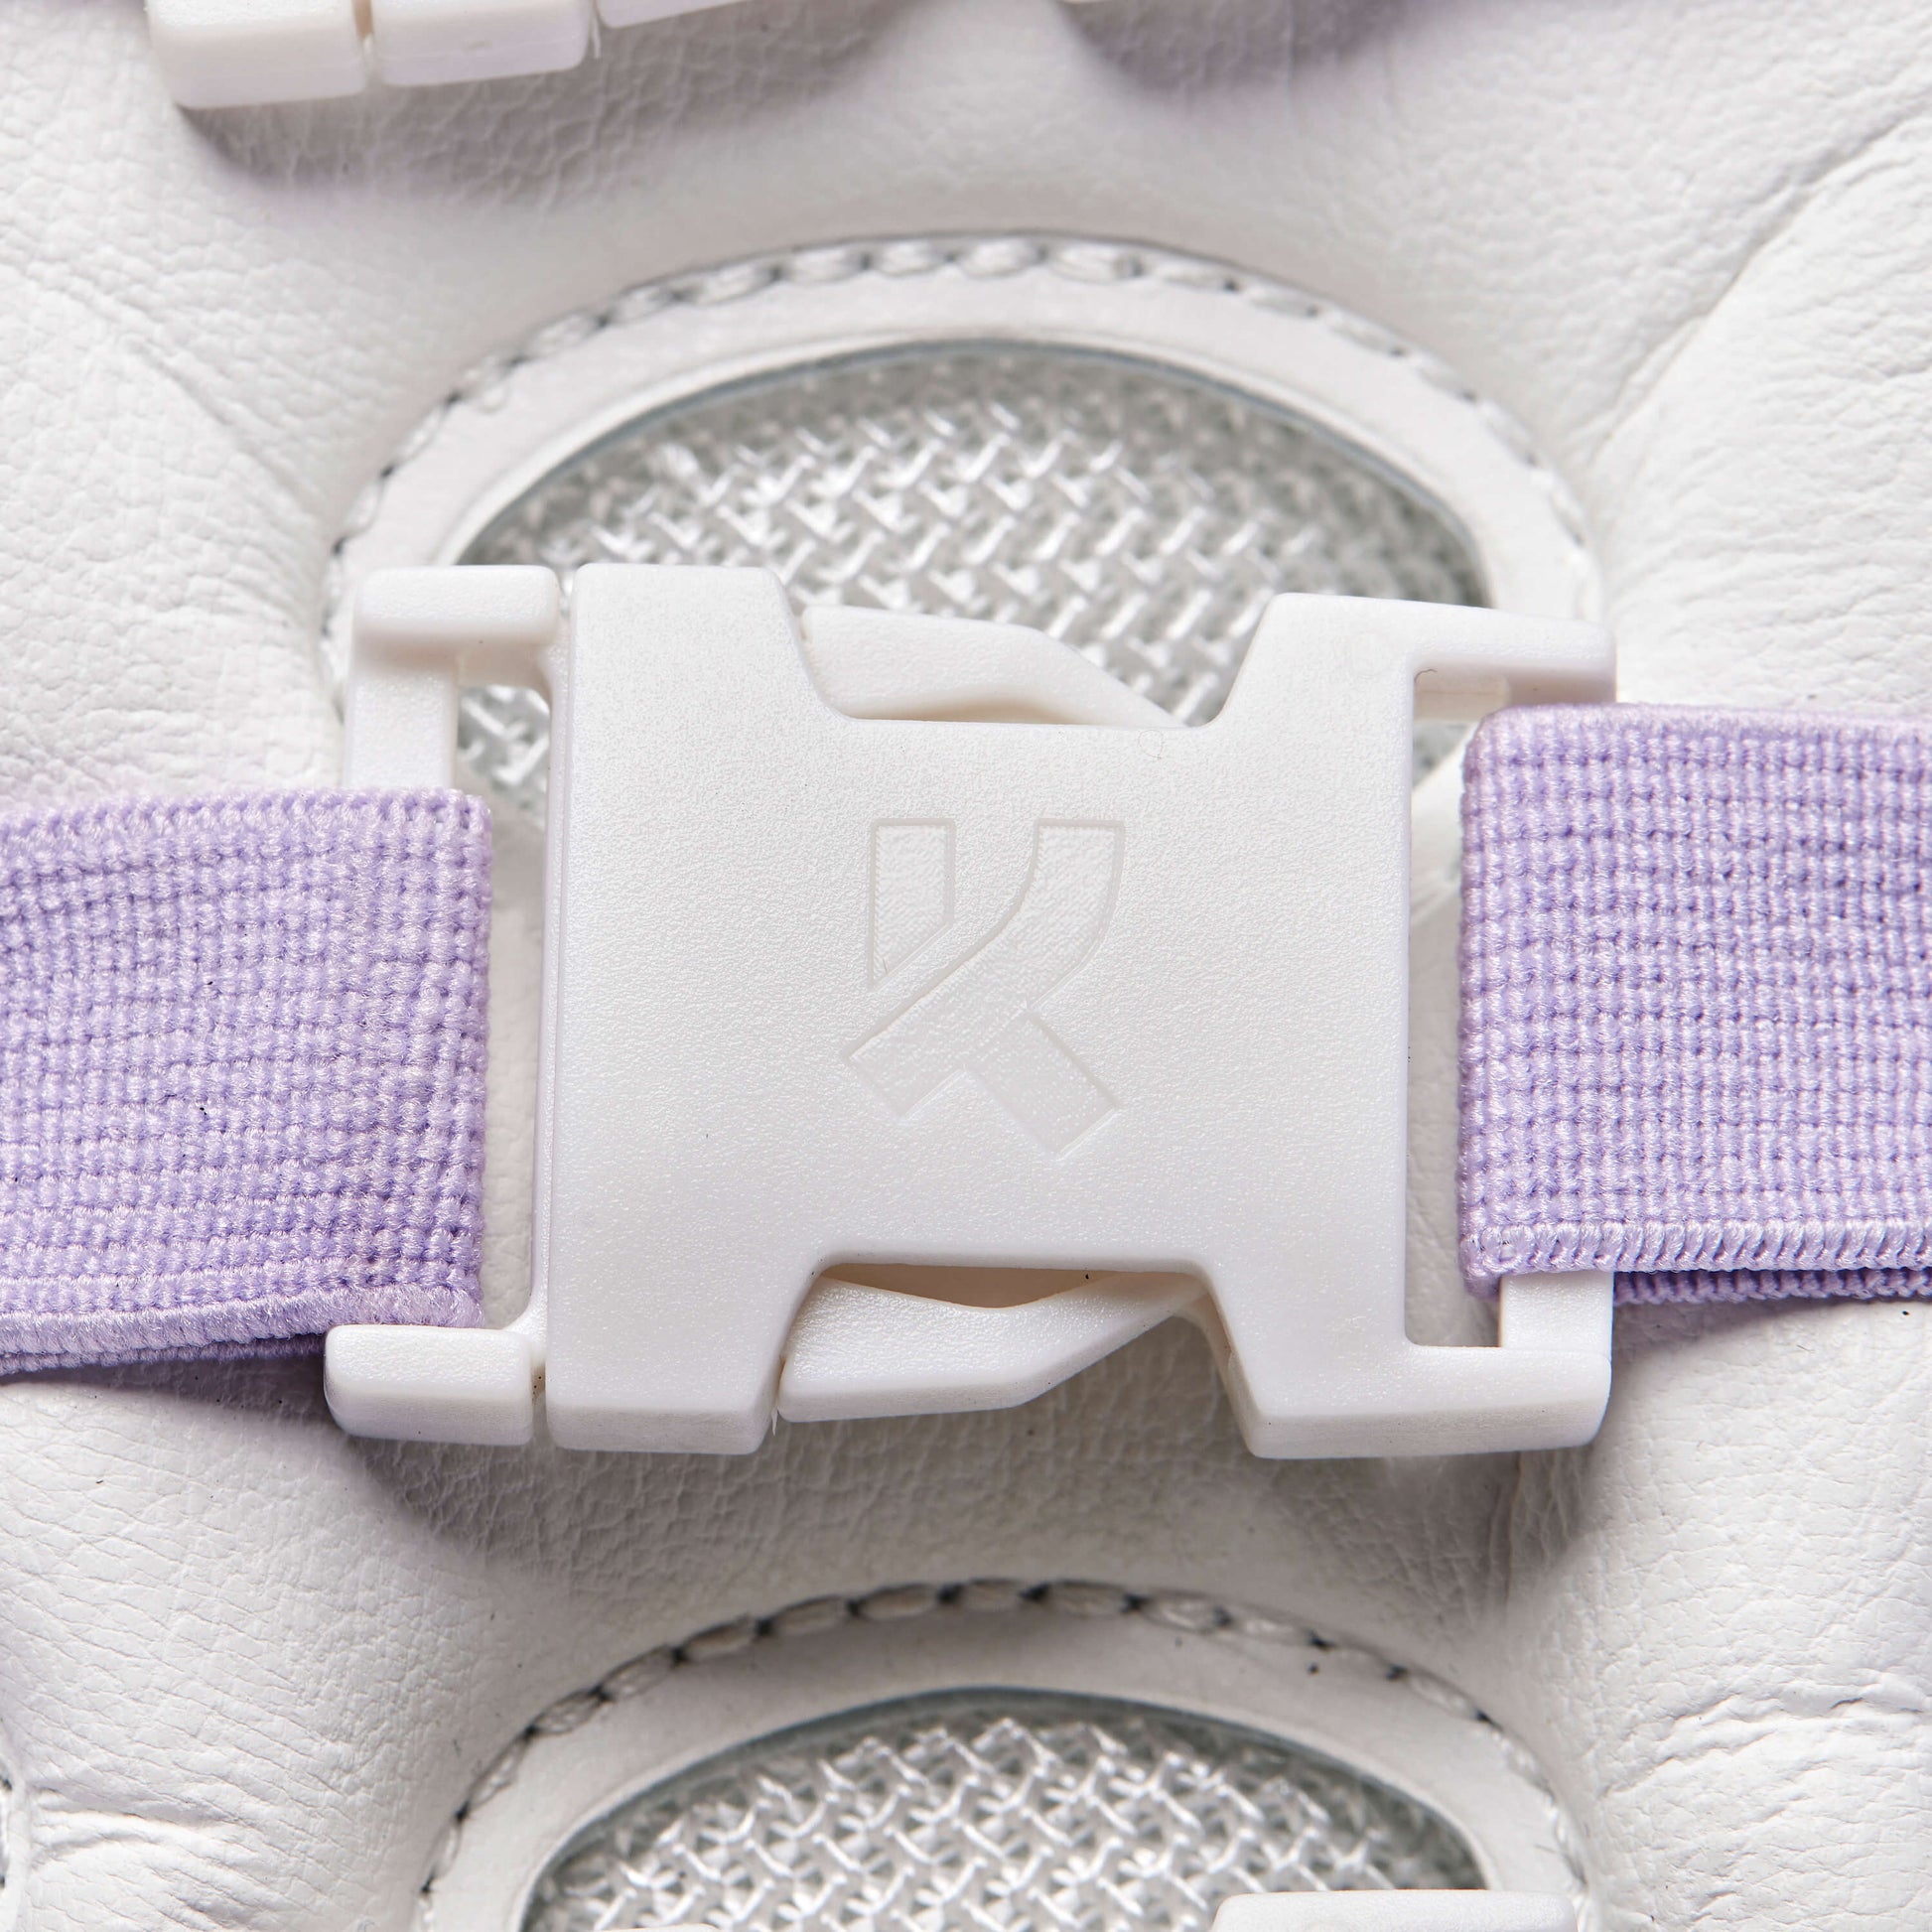 Lavender Sugar Beast Trainers - Trainers - KOI Footwear - White - Closure Detail